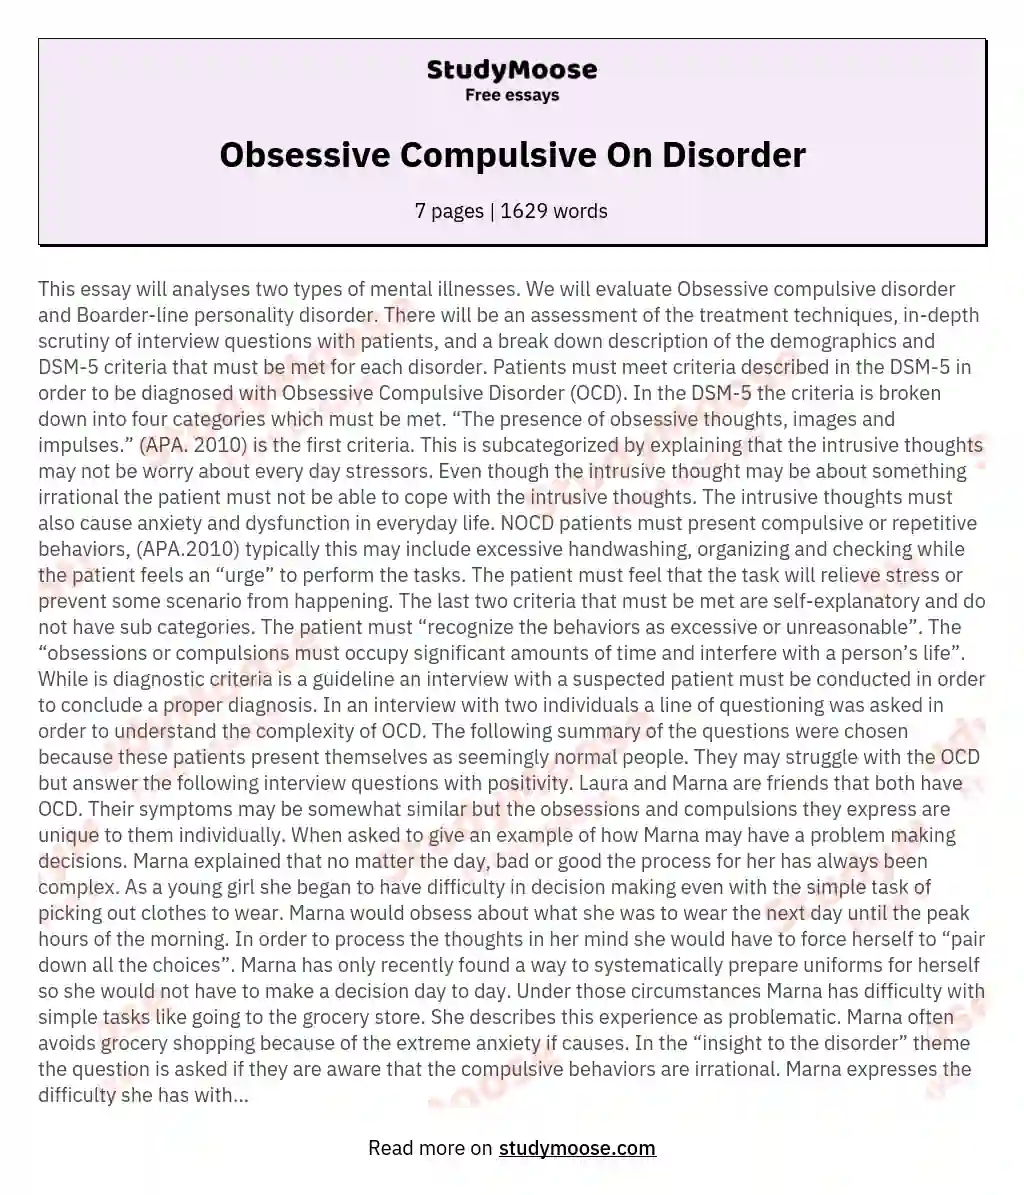 Obsessive Compulsive On Disorder essay